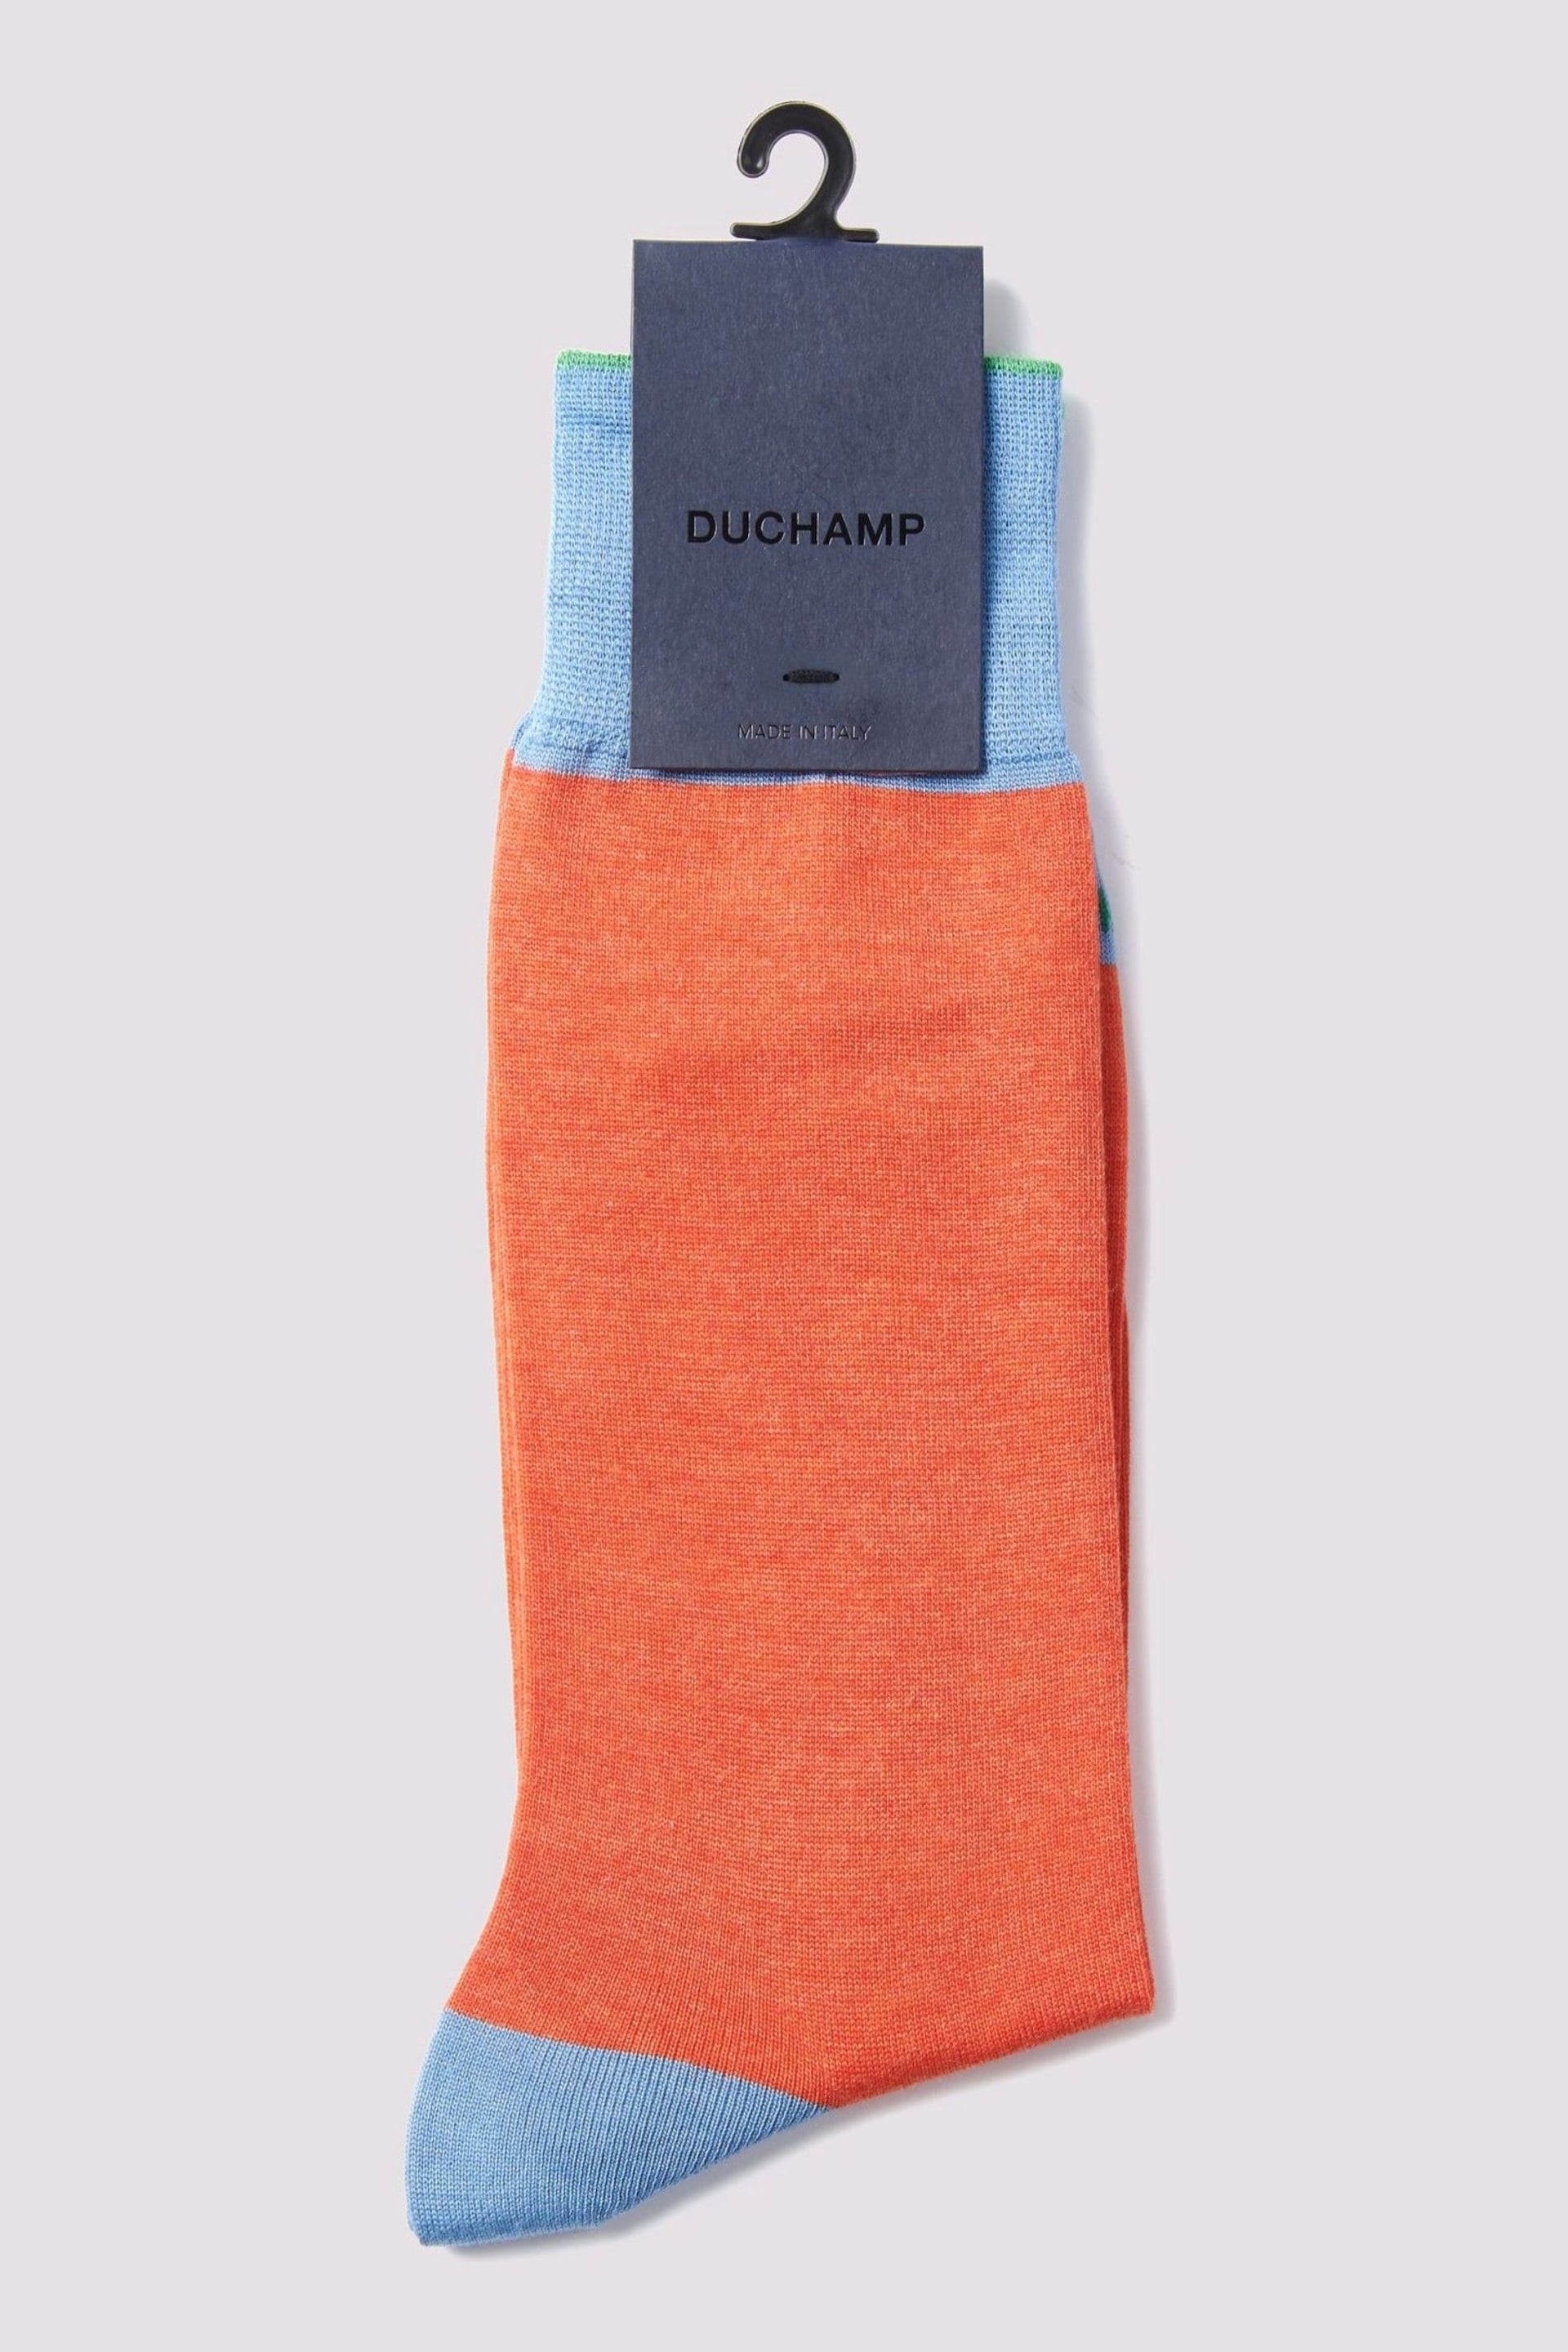 Duchamp Mens Orange Heel Toe Socks - Image 2 of 2